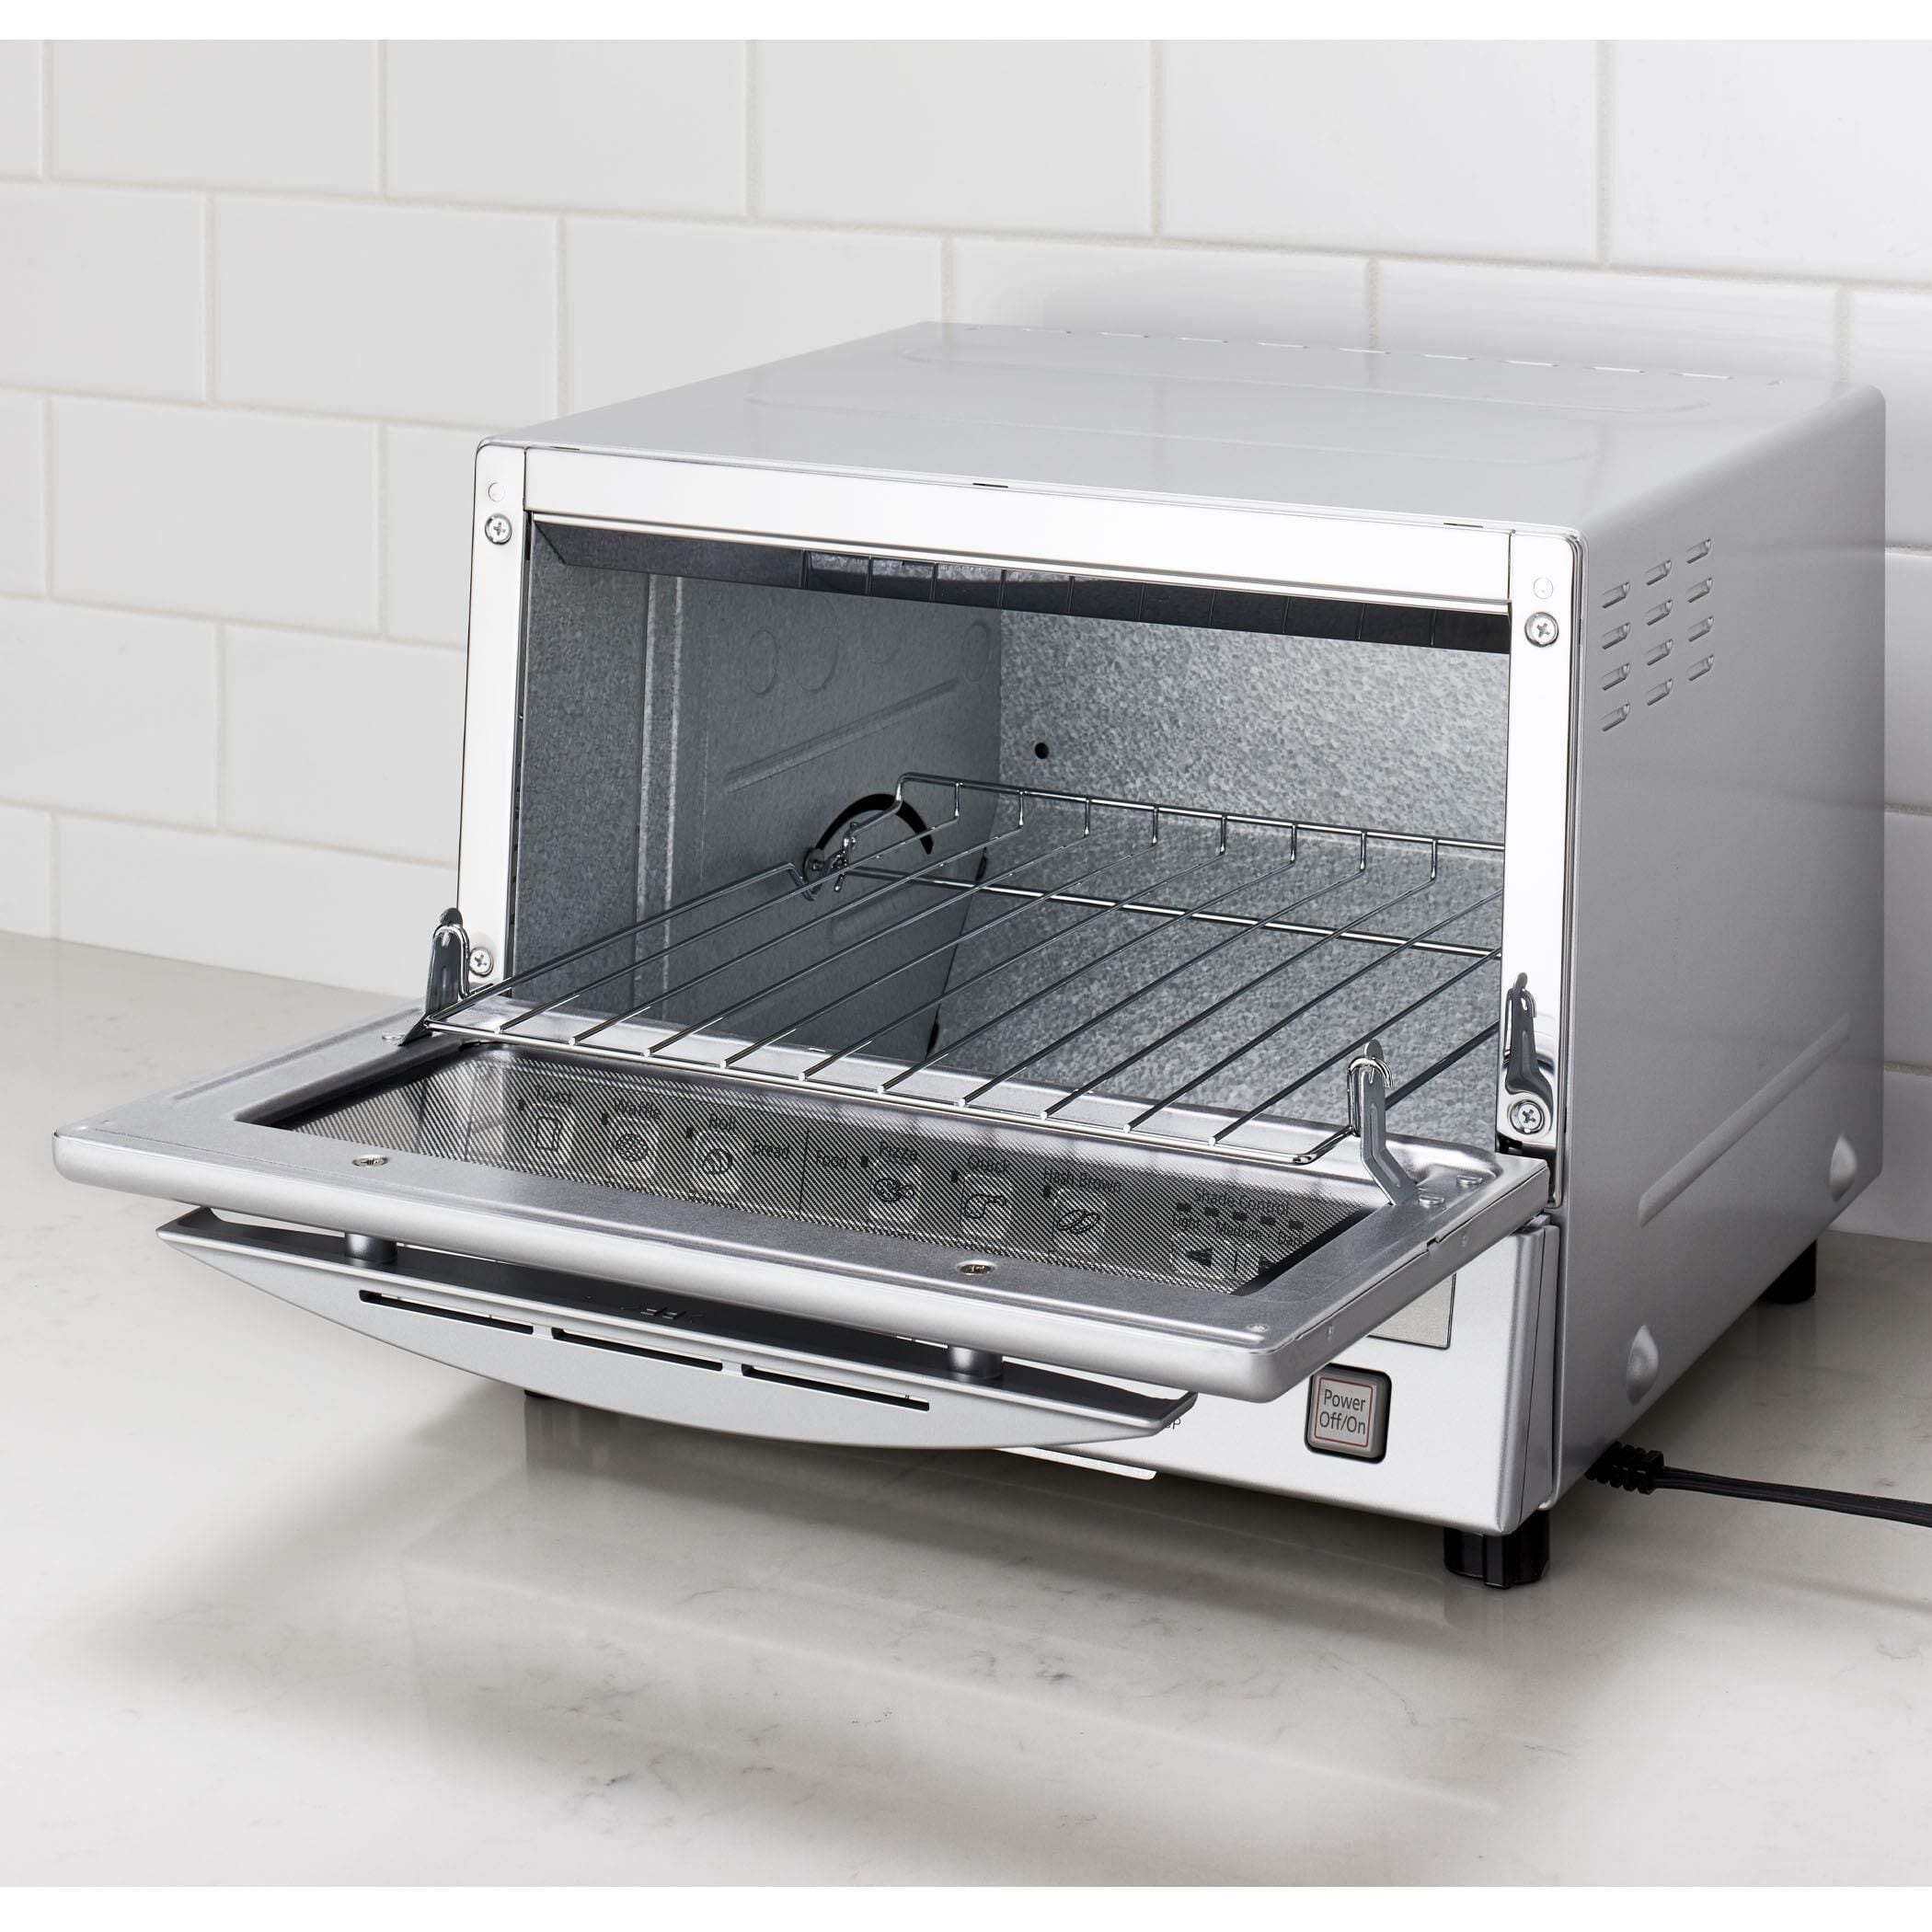 Panasonic FlashXpress 1300 Watt G110P 4 Slice Toaster Oven with